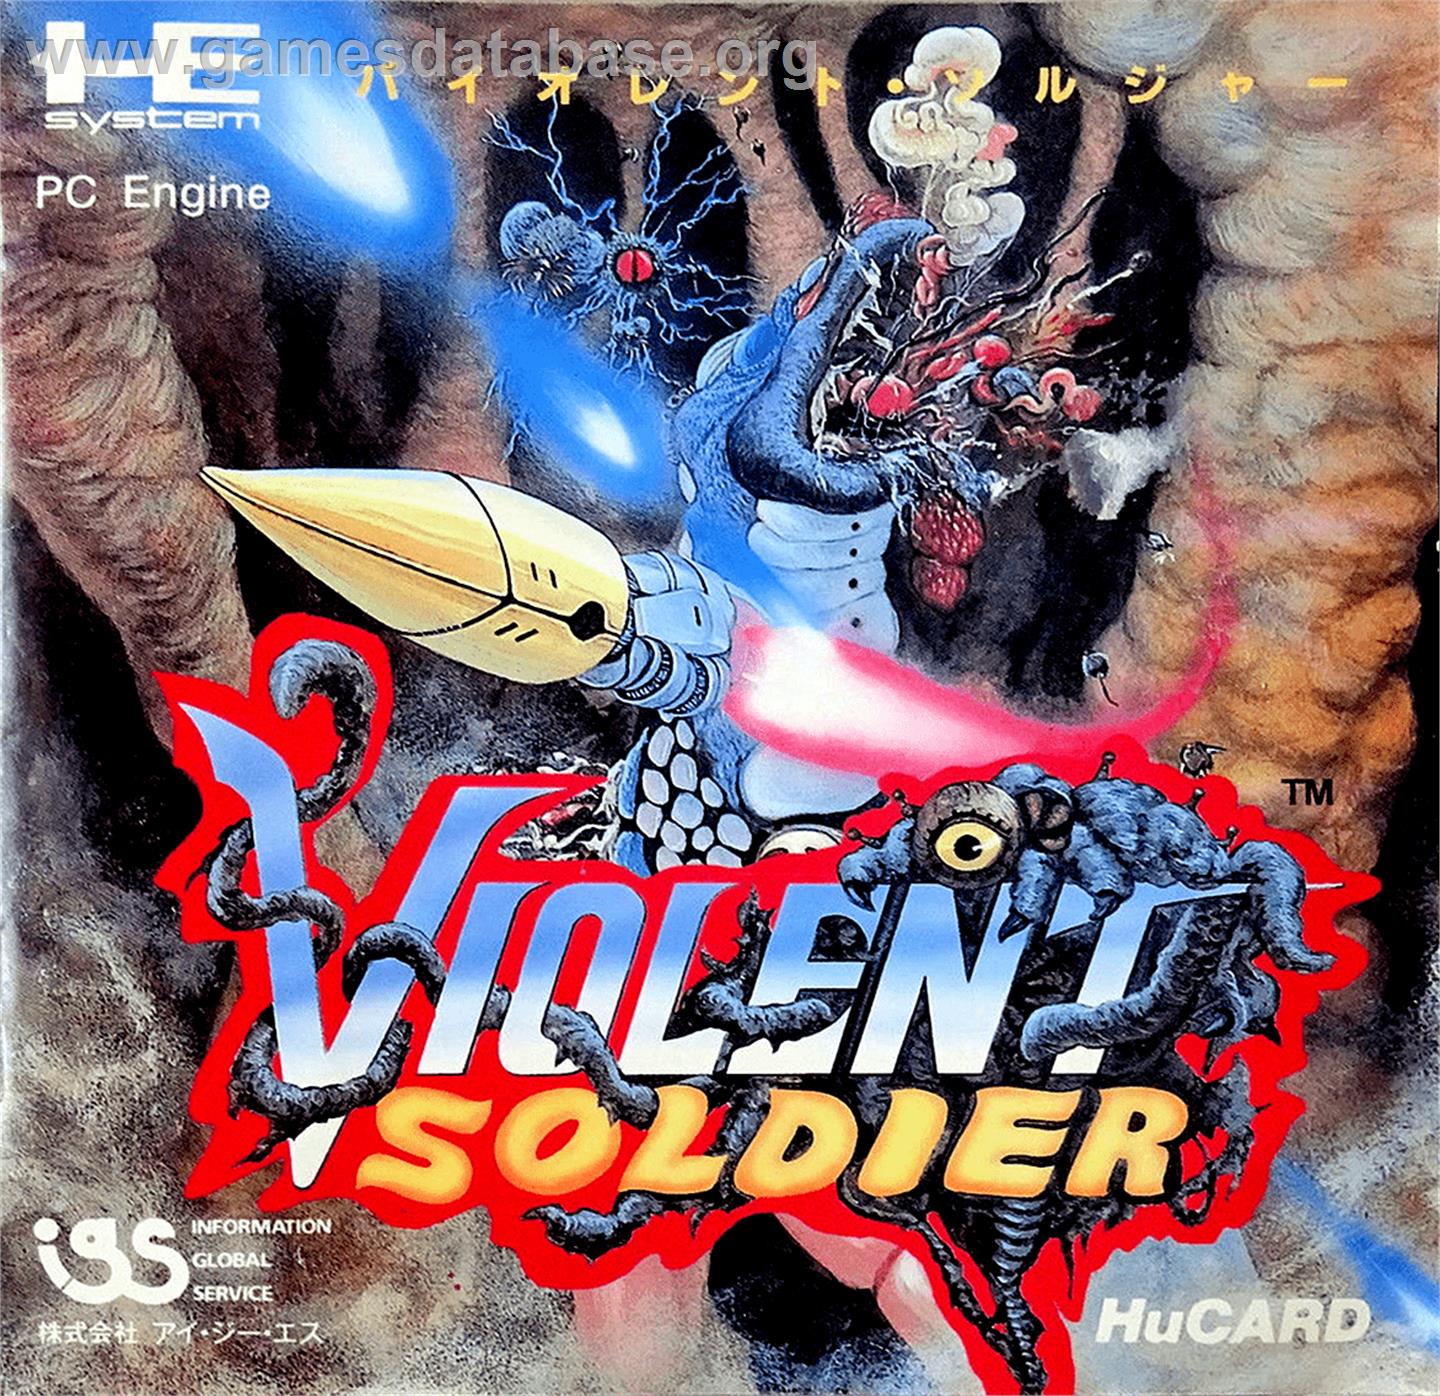 Valis: The Fantasm Soldier - NEC PC Engine - Artwork - Box